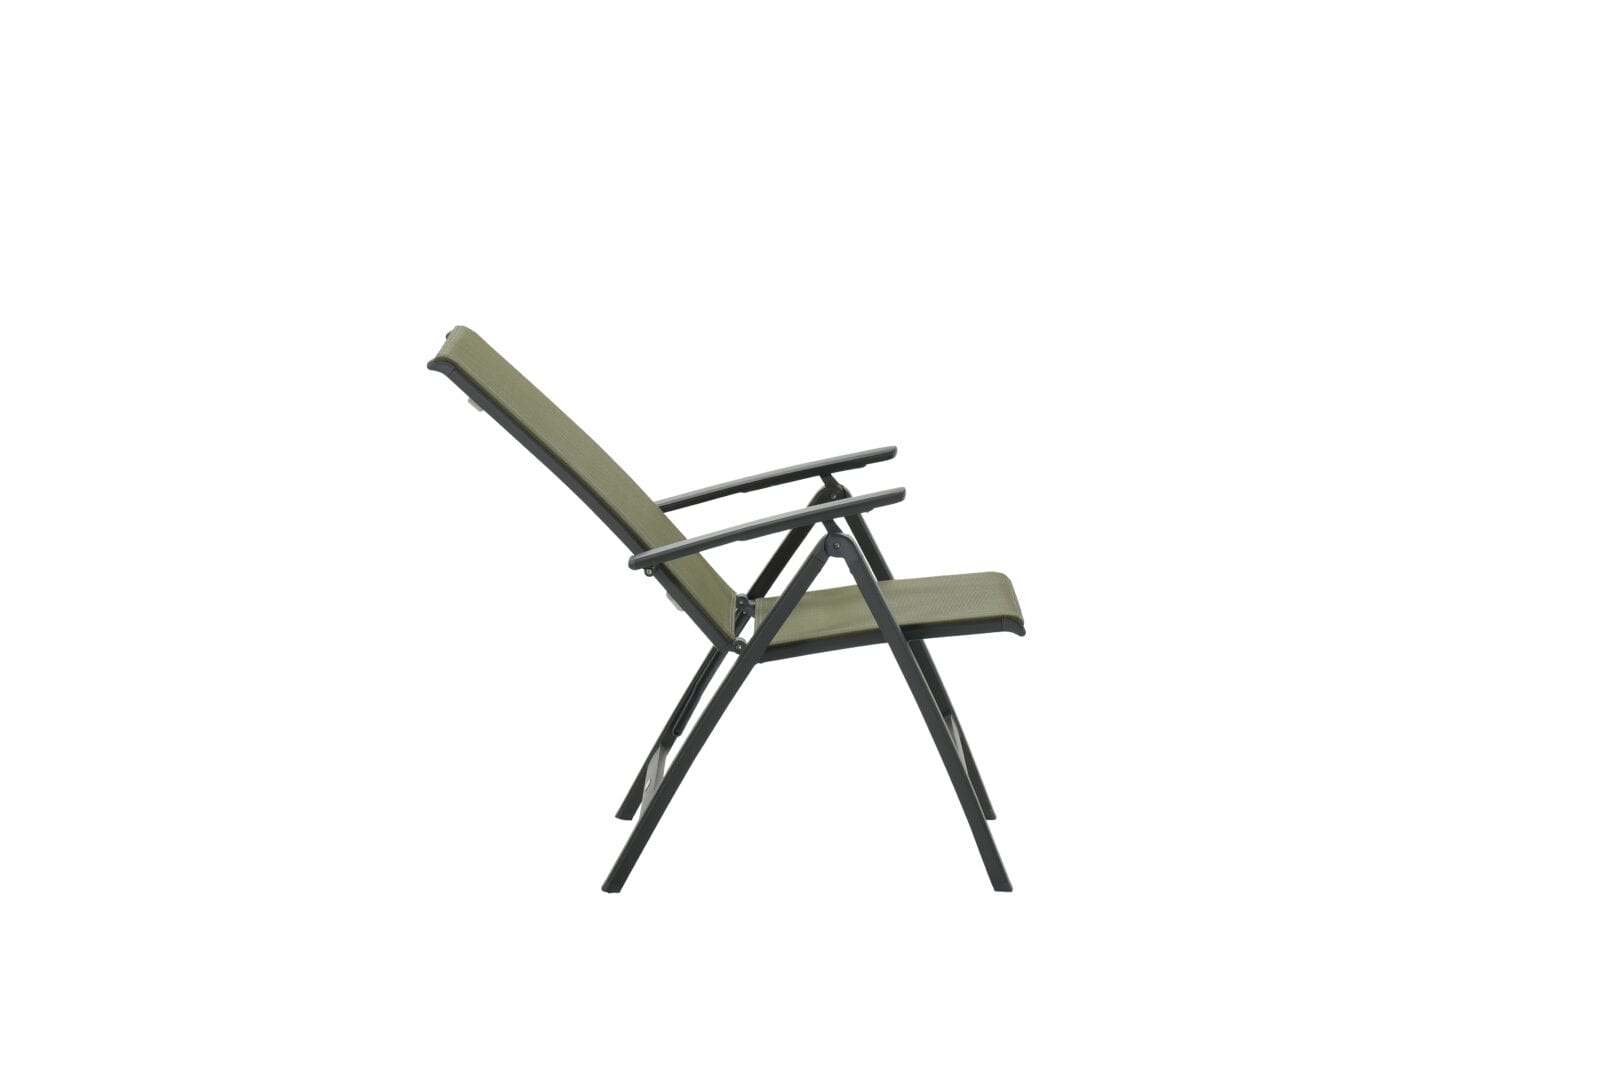 Gala verstelbare stoel - carbon black/ anthr/grey teak look 60308GT rechts 4 5MB scaled